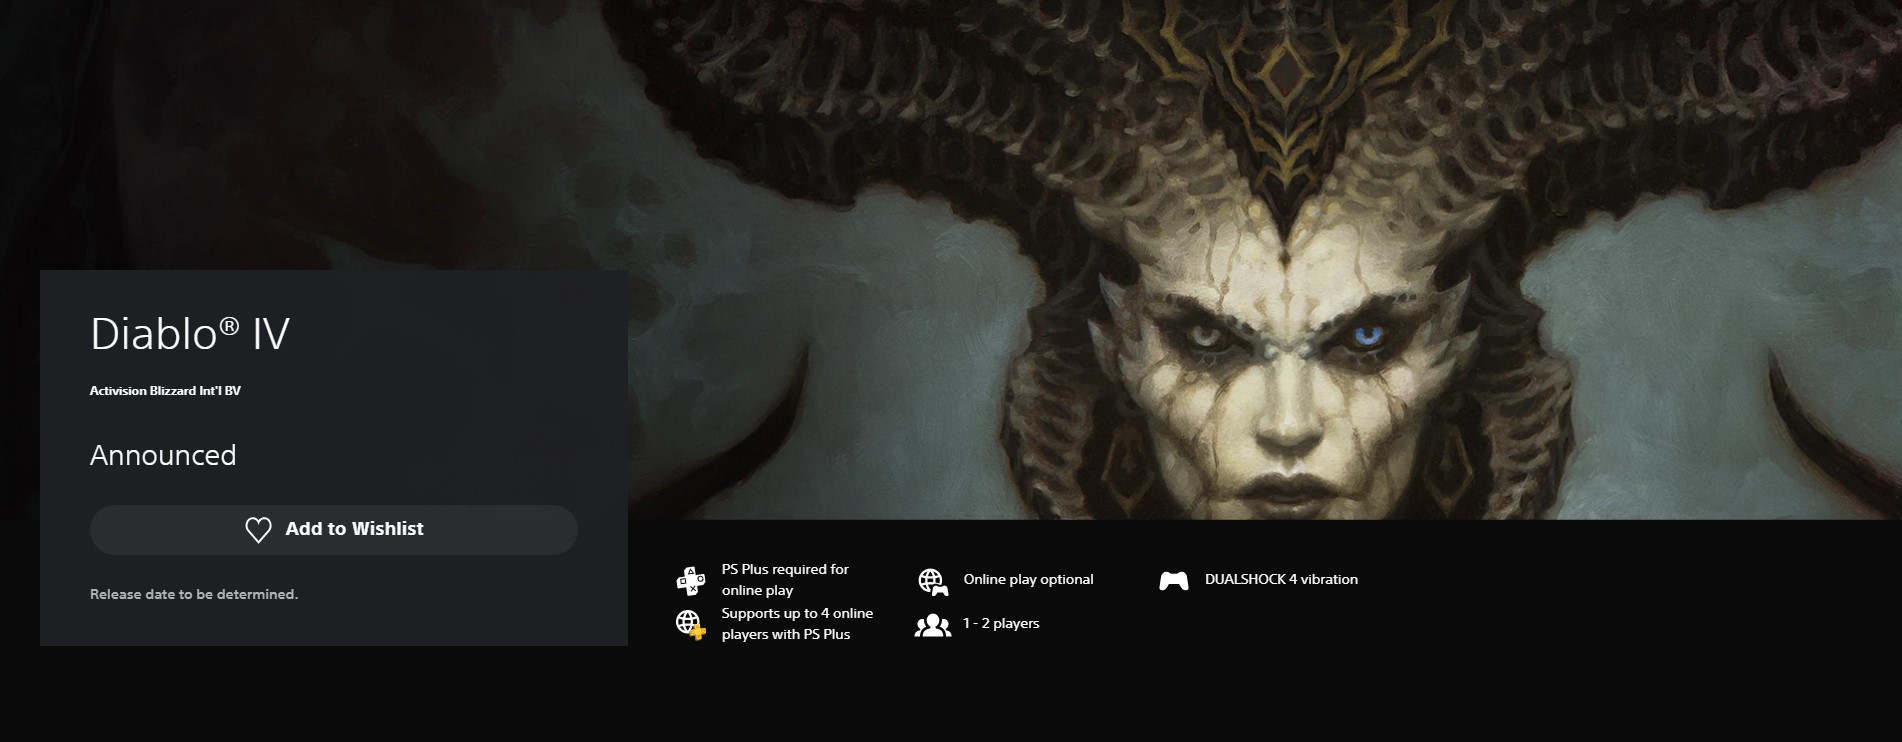 Vandt Forbindelse Port Diablo IV Added to the Playstation Store - News - Icy Veins